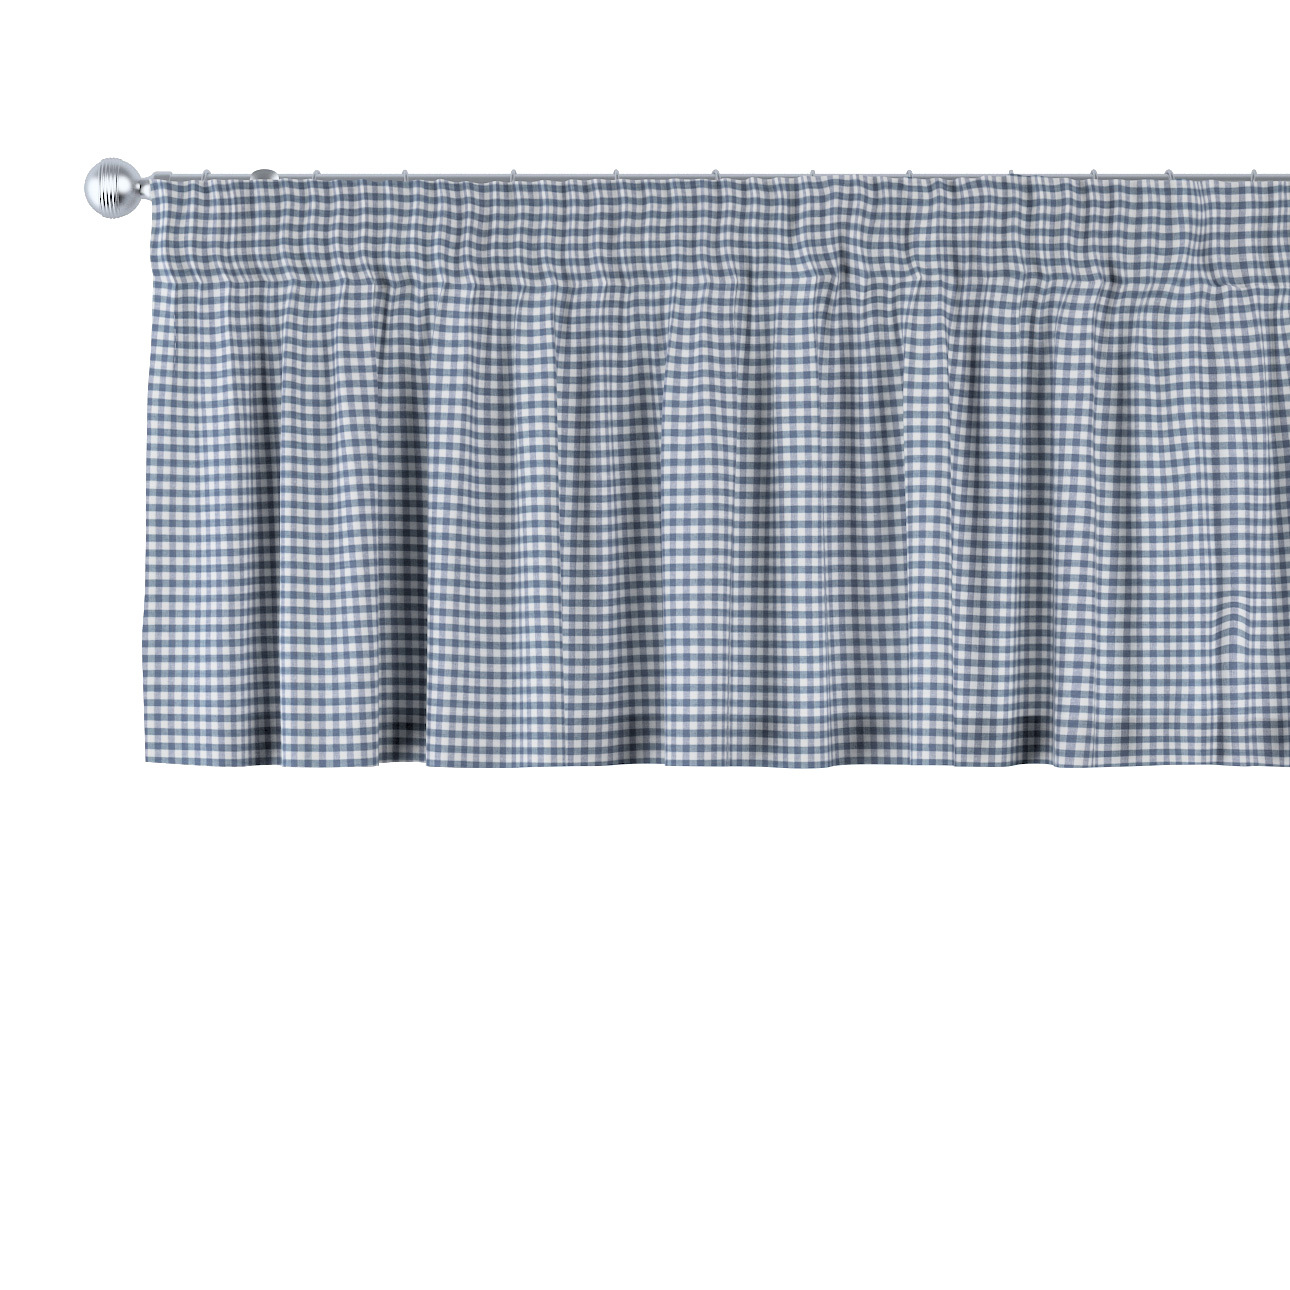 Kurzgardine mit Kräuselband, marinenblau-ecru , 260 x 40 cm, Quadro (136-00 günstig online kaufen